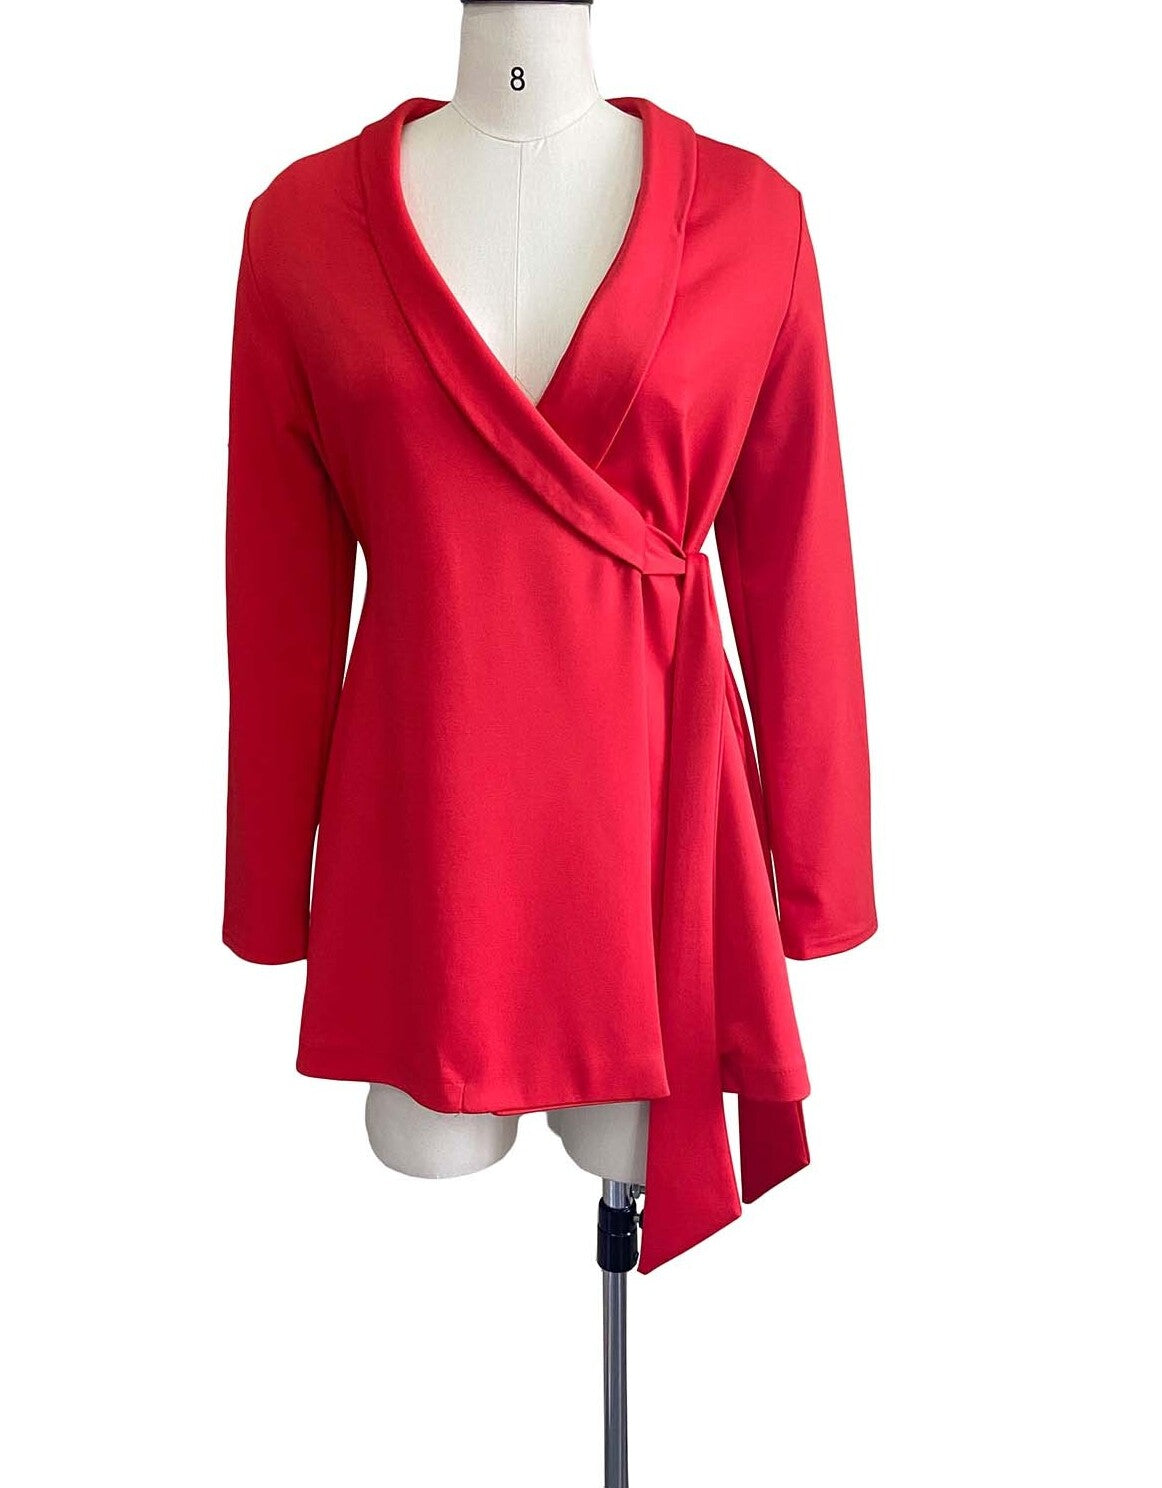 BamBam Fall Professional Red Long Sleeve Knotted Blazer Dress - BamBam Clothing